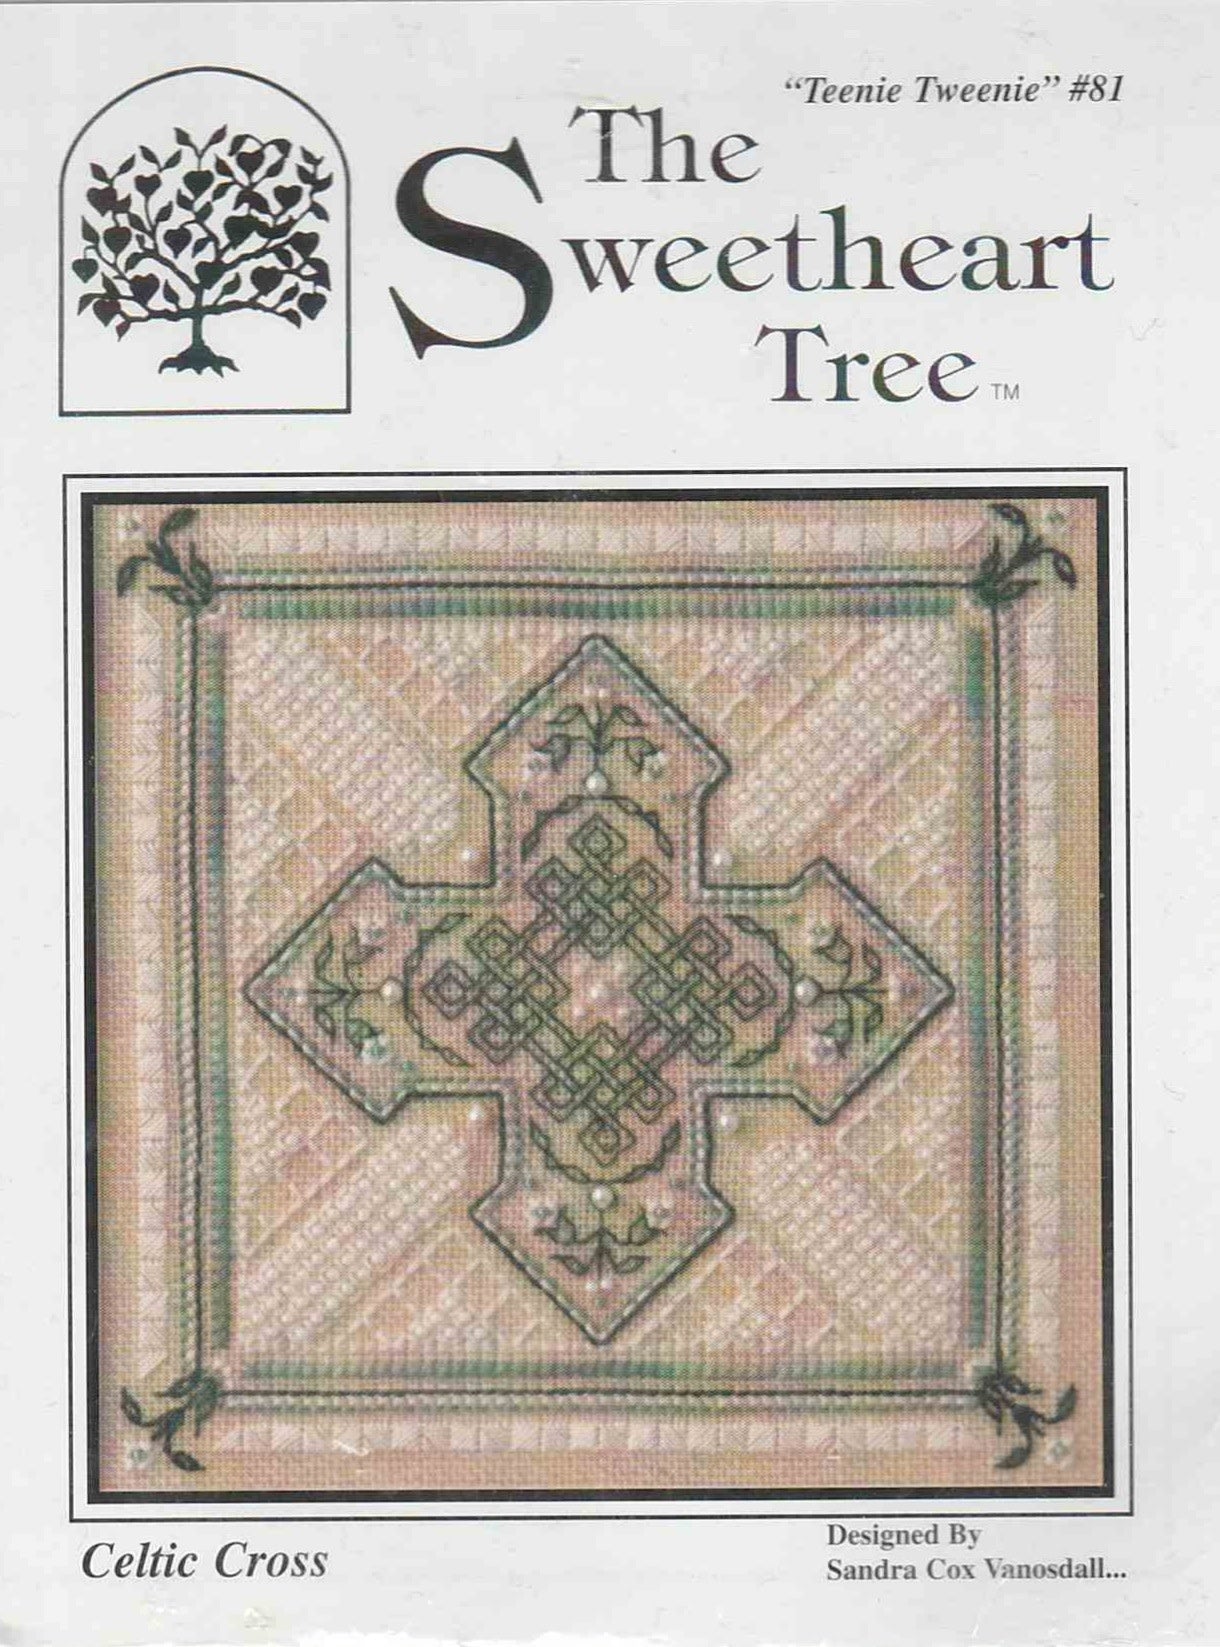 La croix celtique Sweetheart Tree - "Teenie Tweenie" # 81